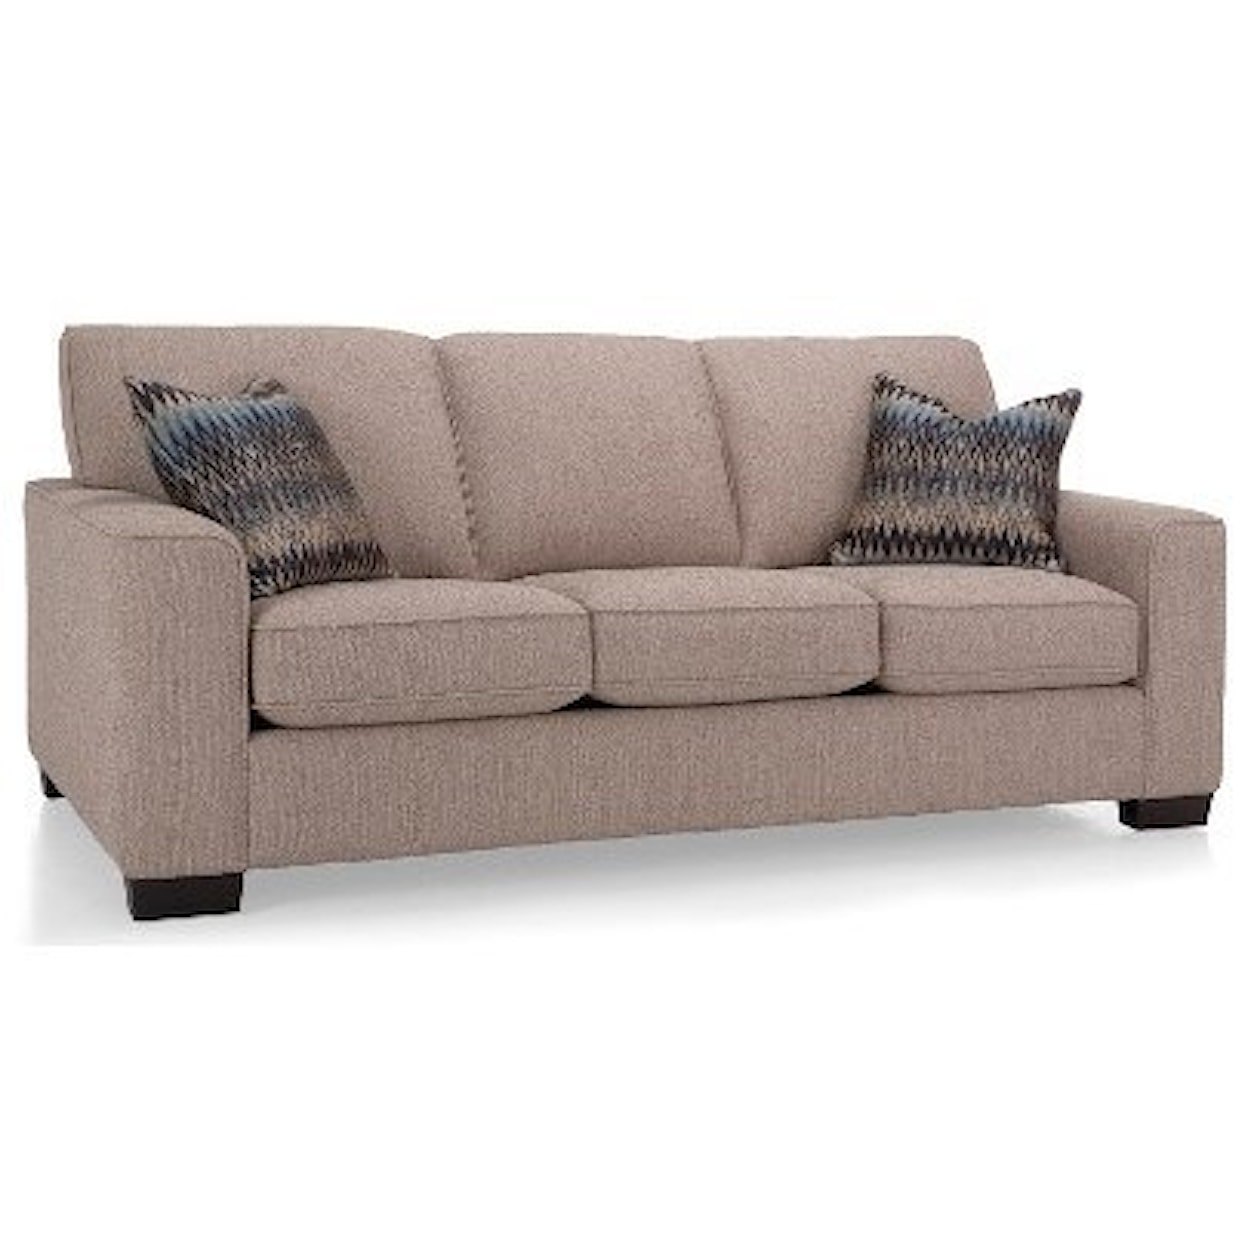 Decor-Rest 2483 Sofa